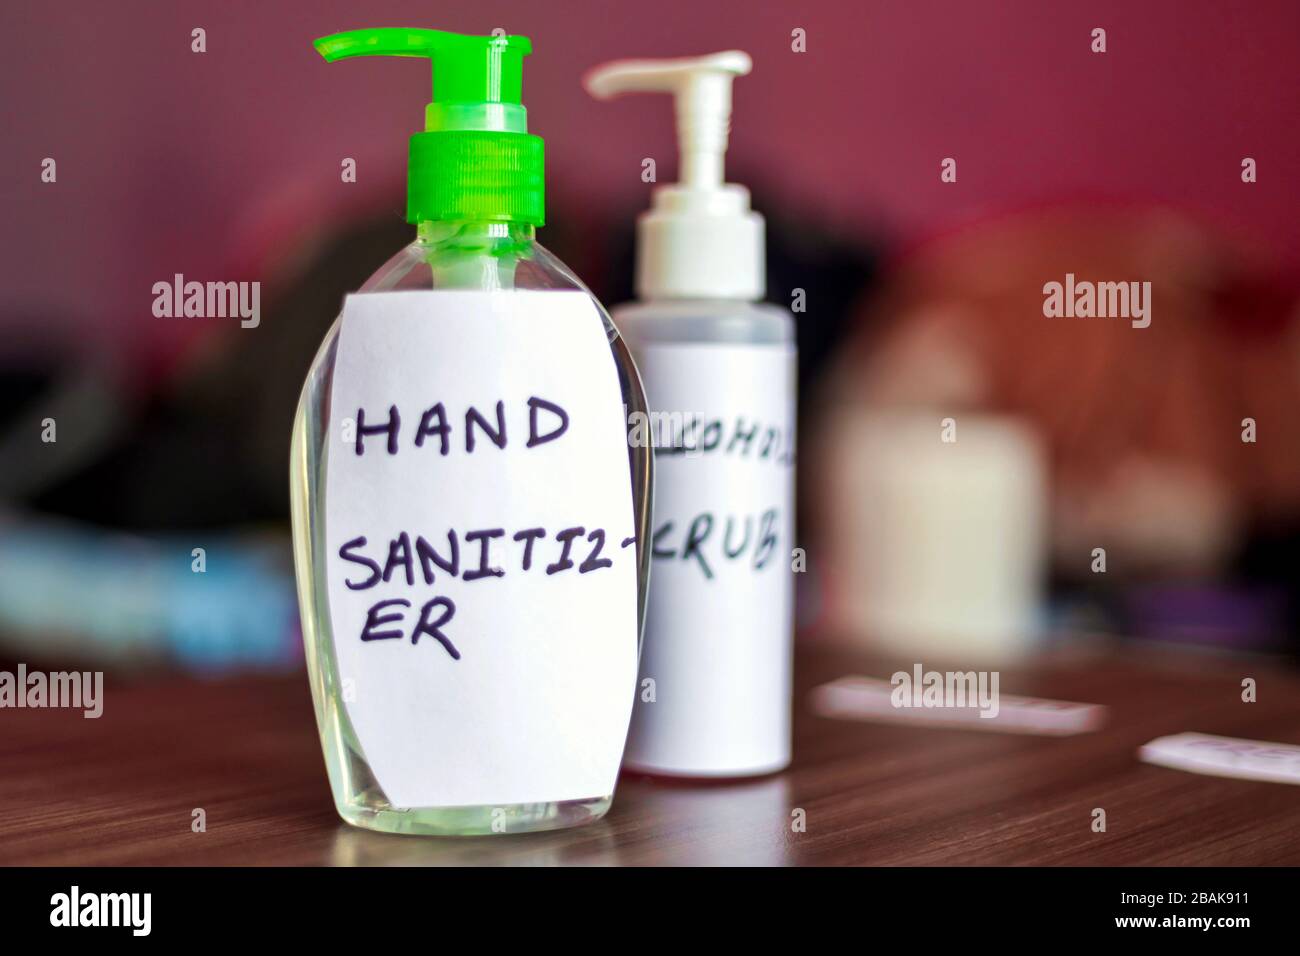 Hand scrub Stock Photos, Royalty Free Hand scrub Images